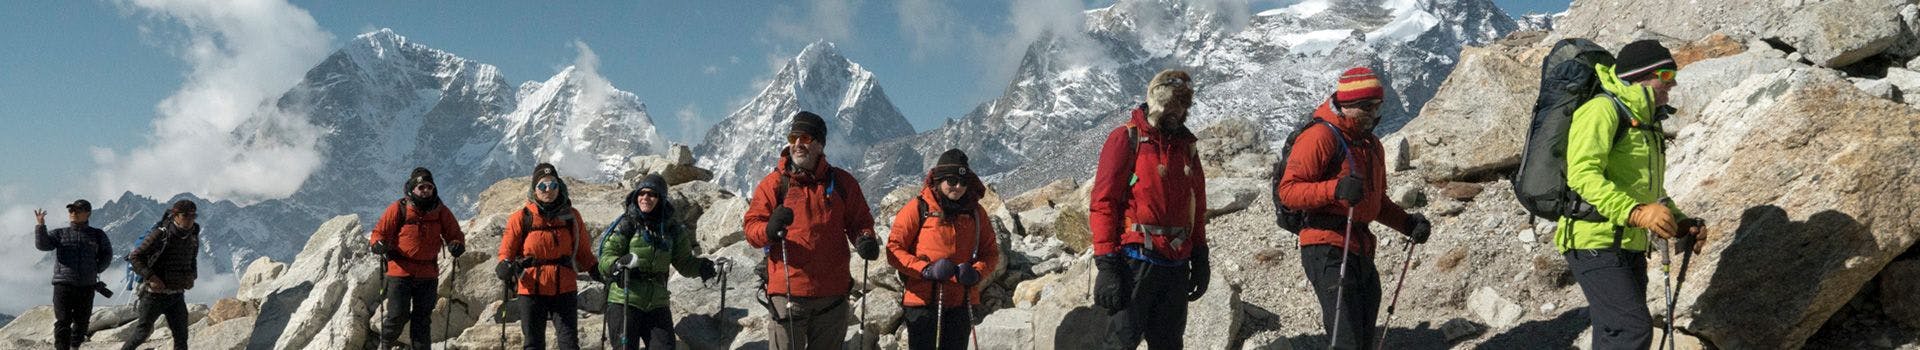 Mount Everest Base Camp Climb